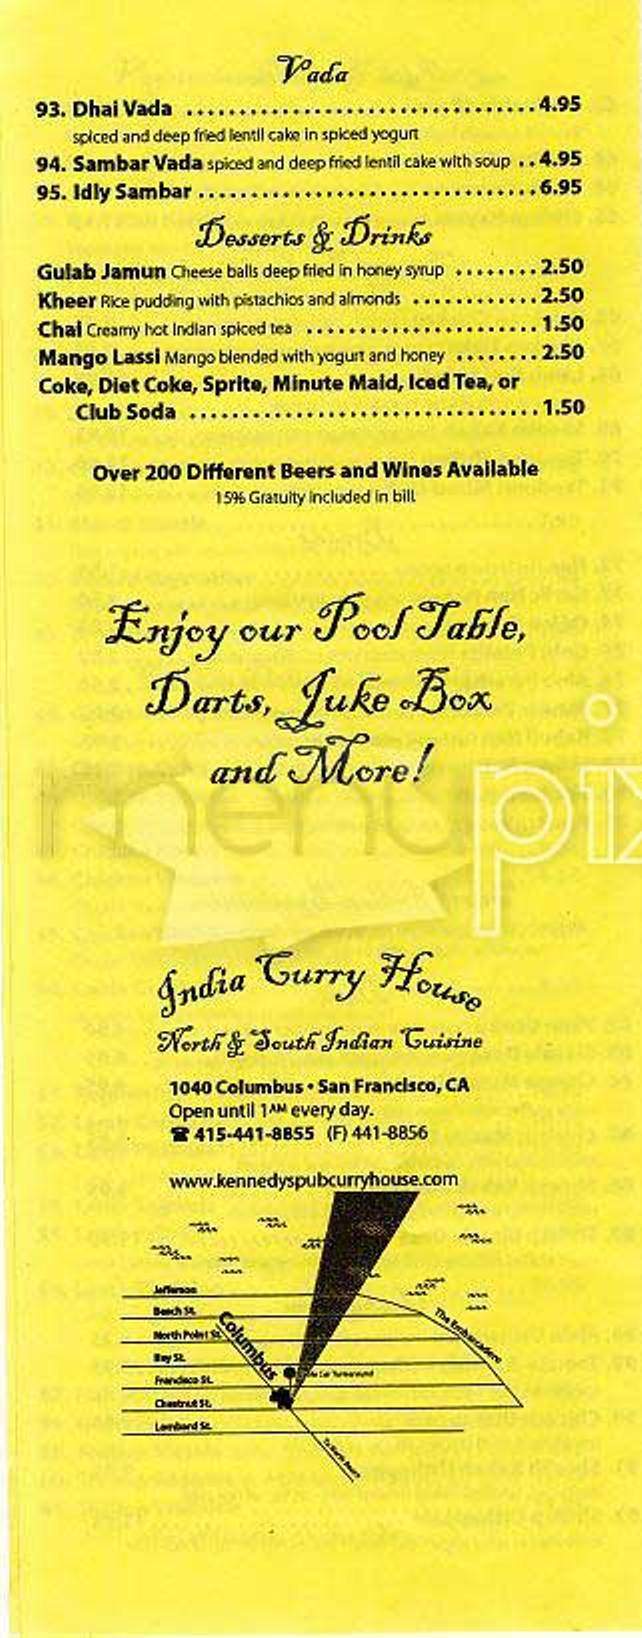 /100492/Kennedys-Pub-Curry-House-San-Francisco-CA - San Francisco, CA